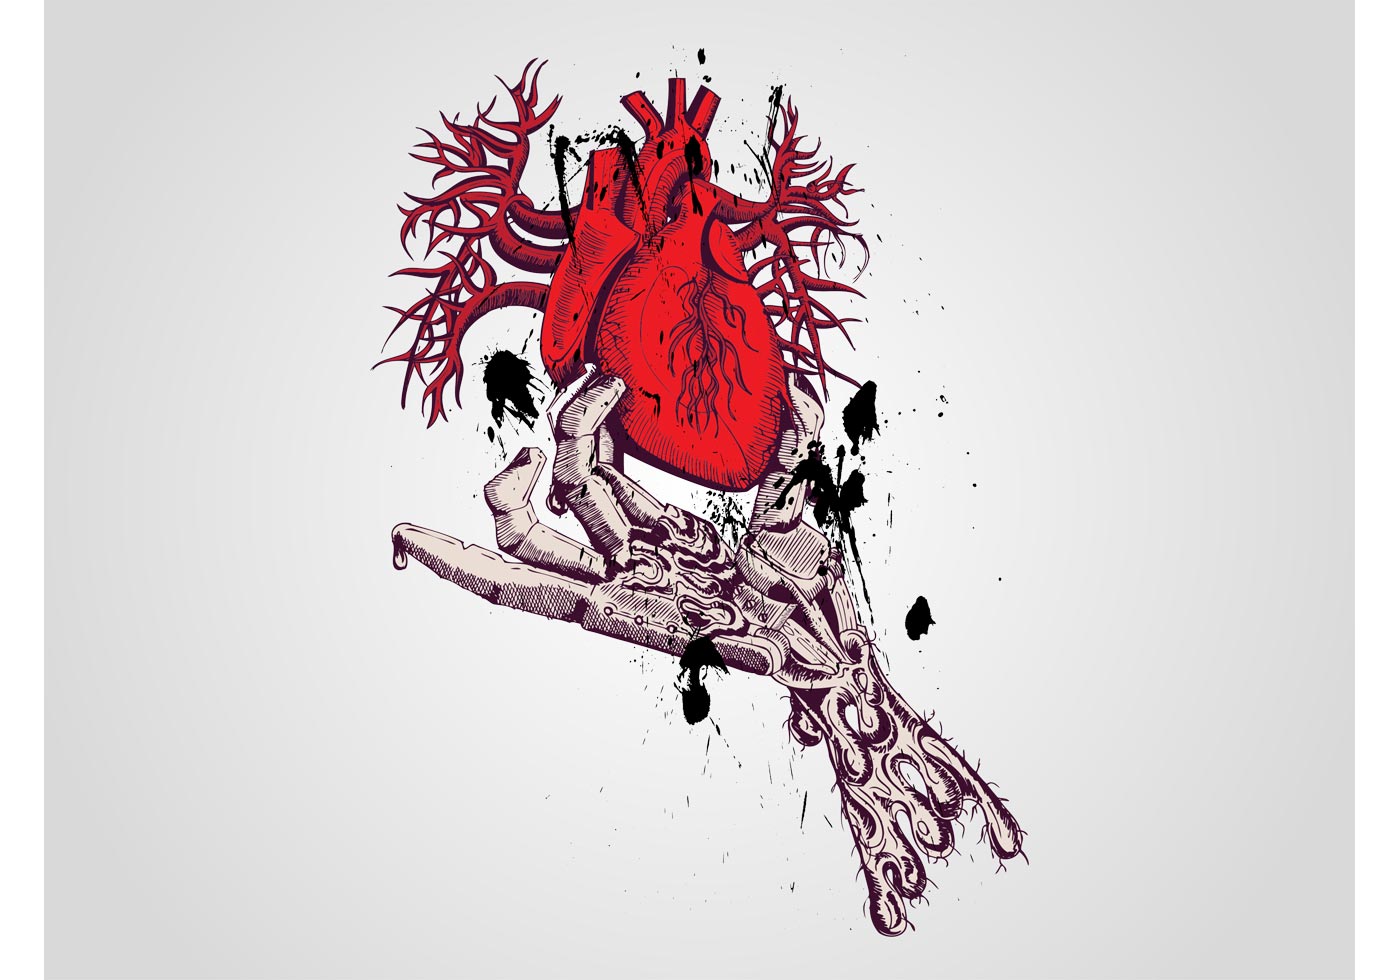 Skeleton Hand Vector - Download Free Vector Art, Stock Graphics & Images